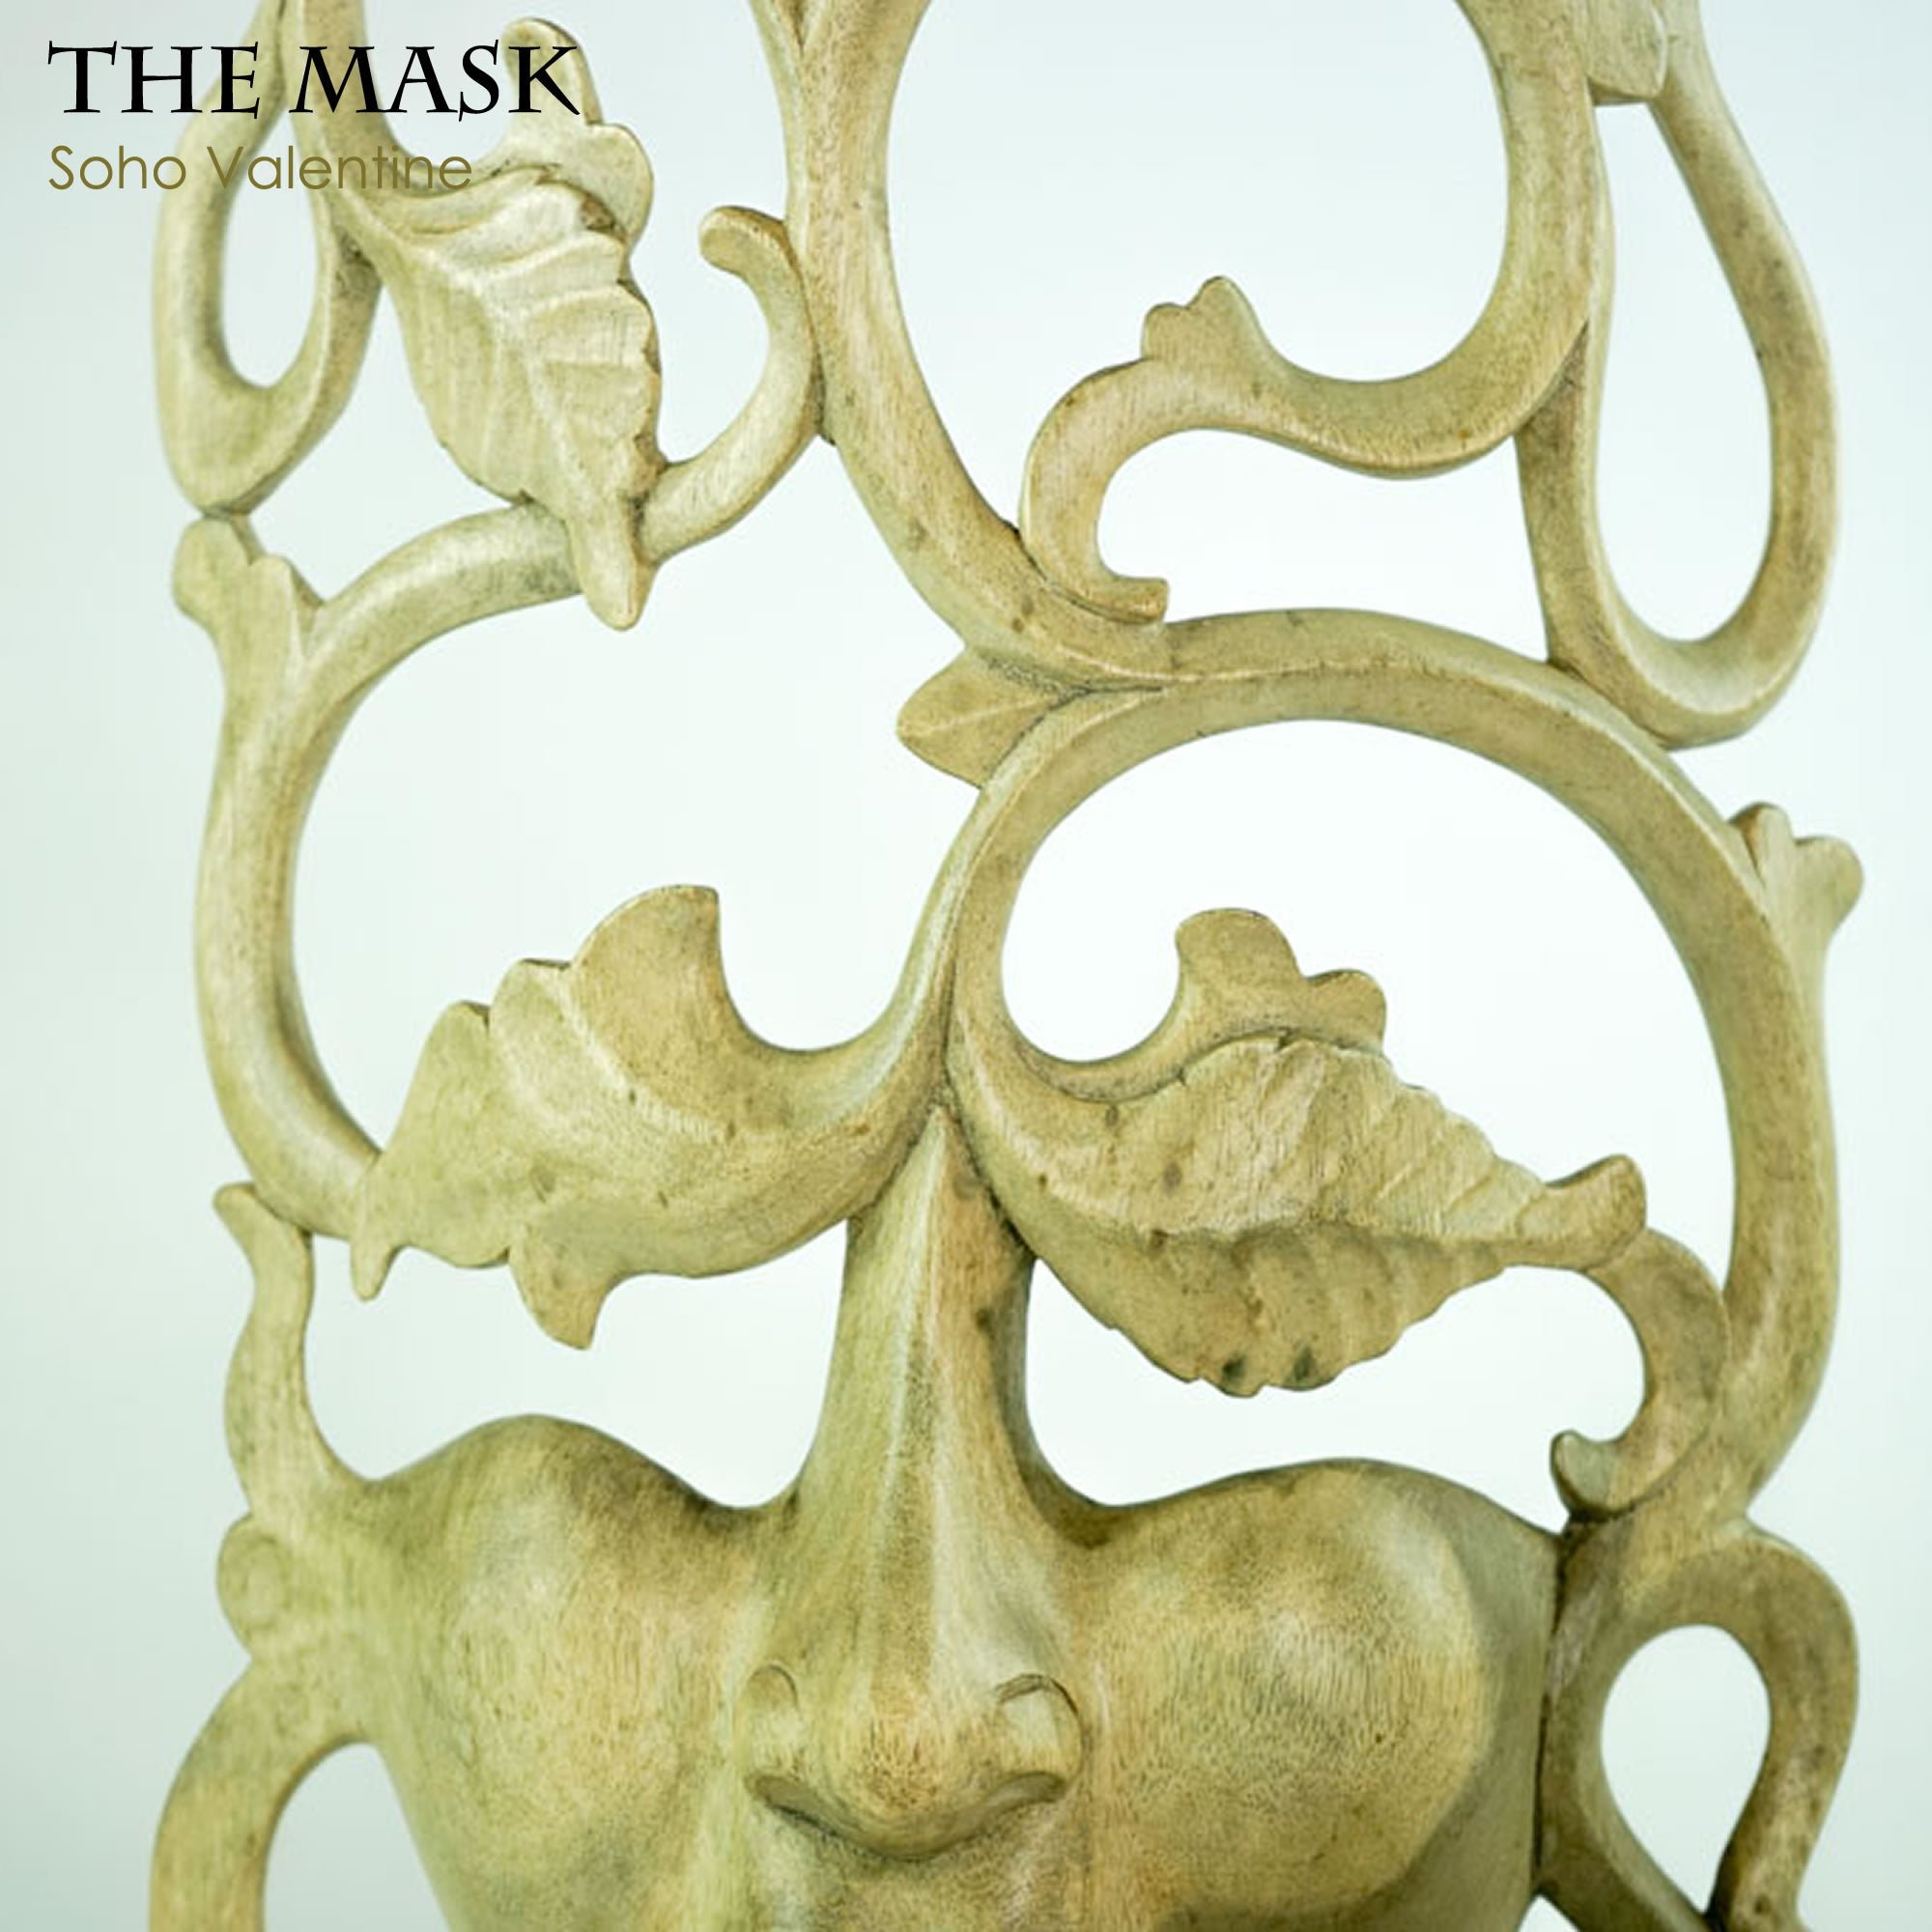 Handmade Carved Wooden Decorative Wall Art Italian Mask Soho Valentine - Easternada